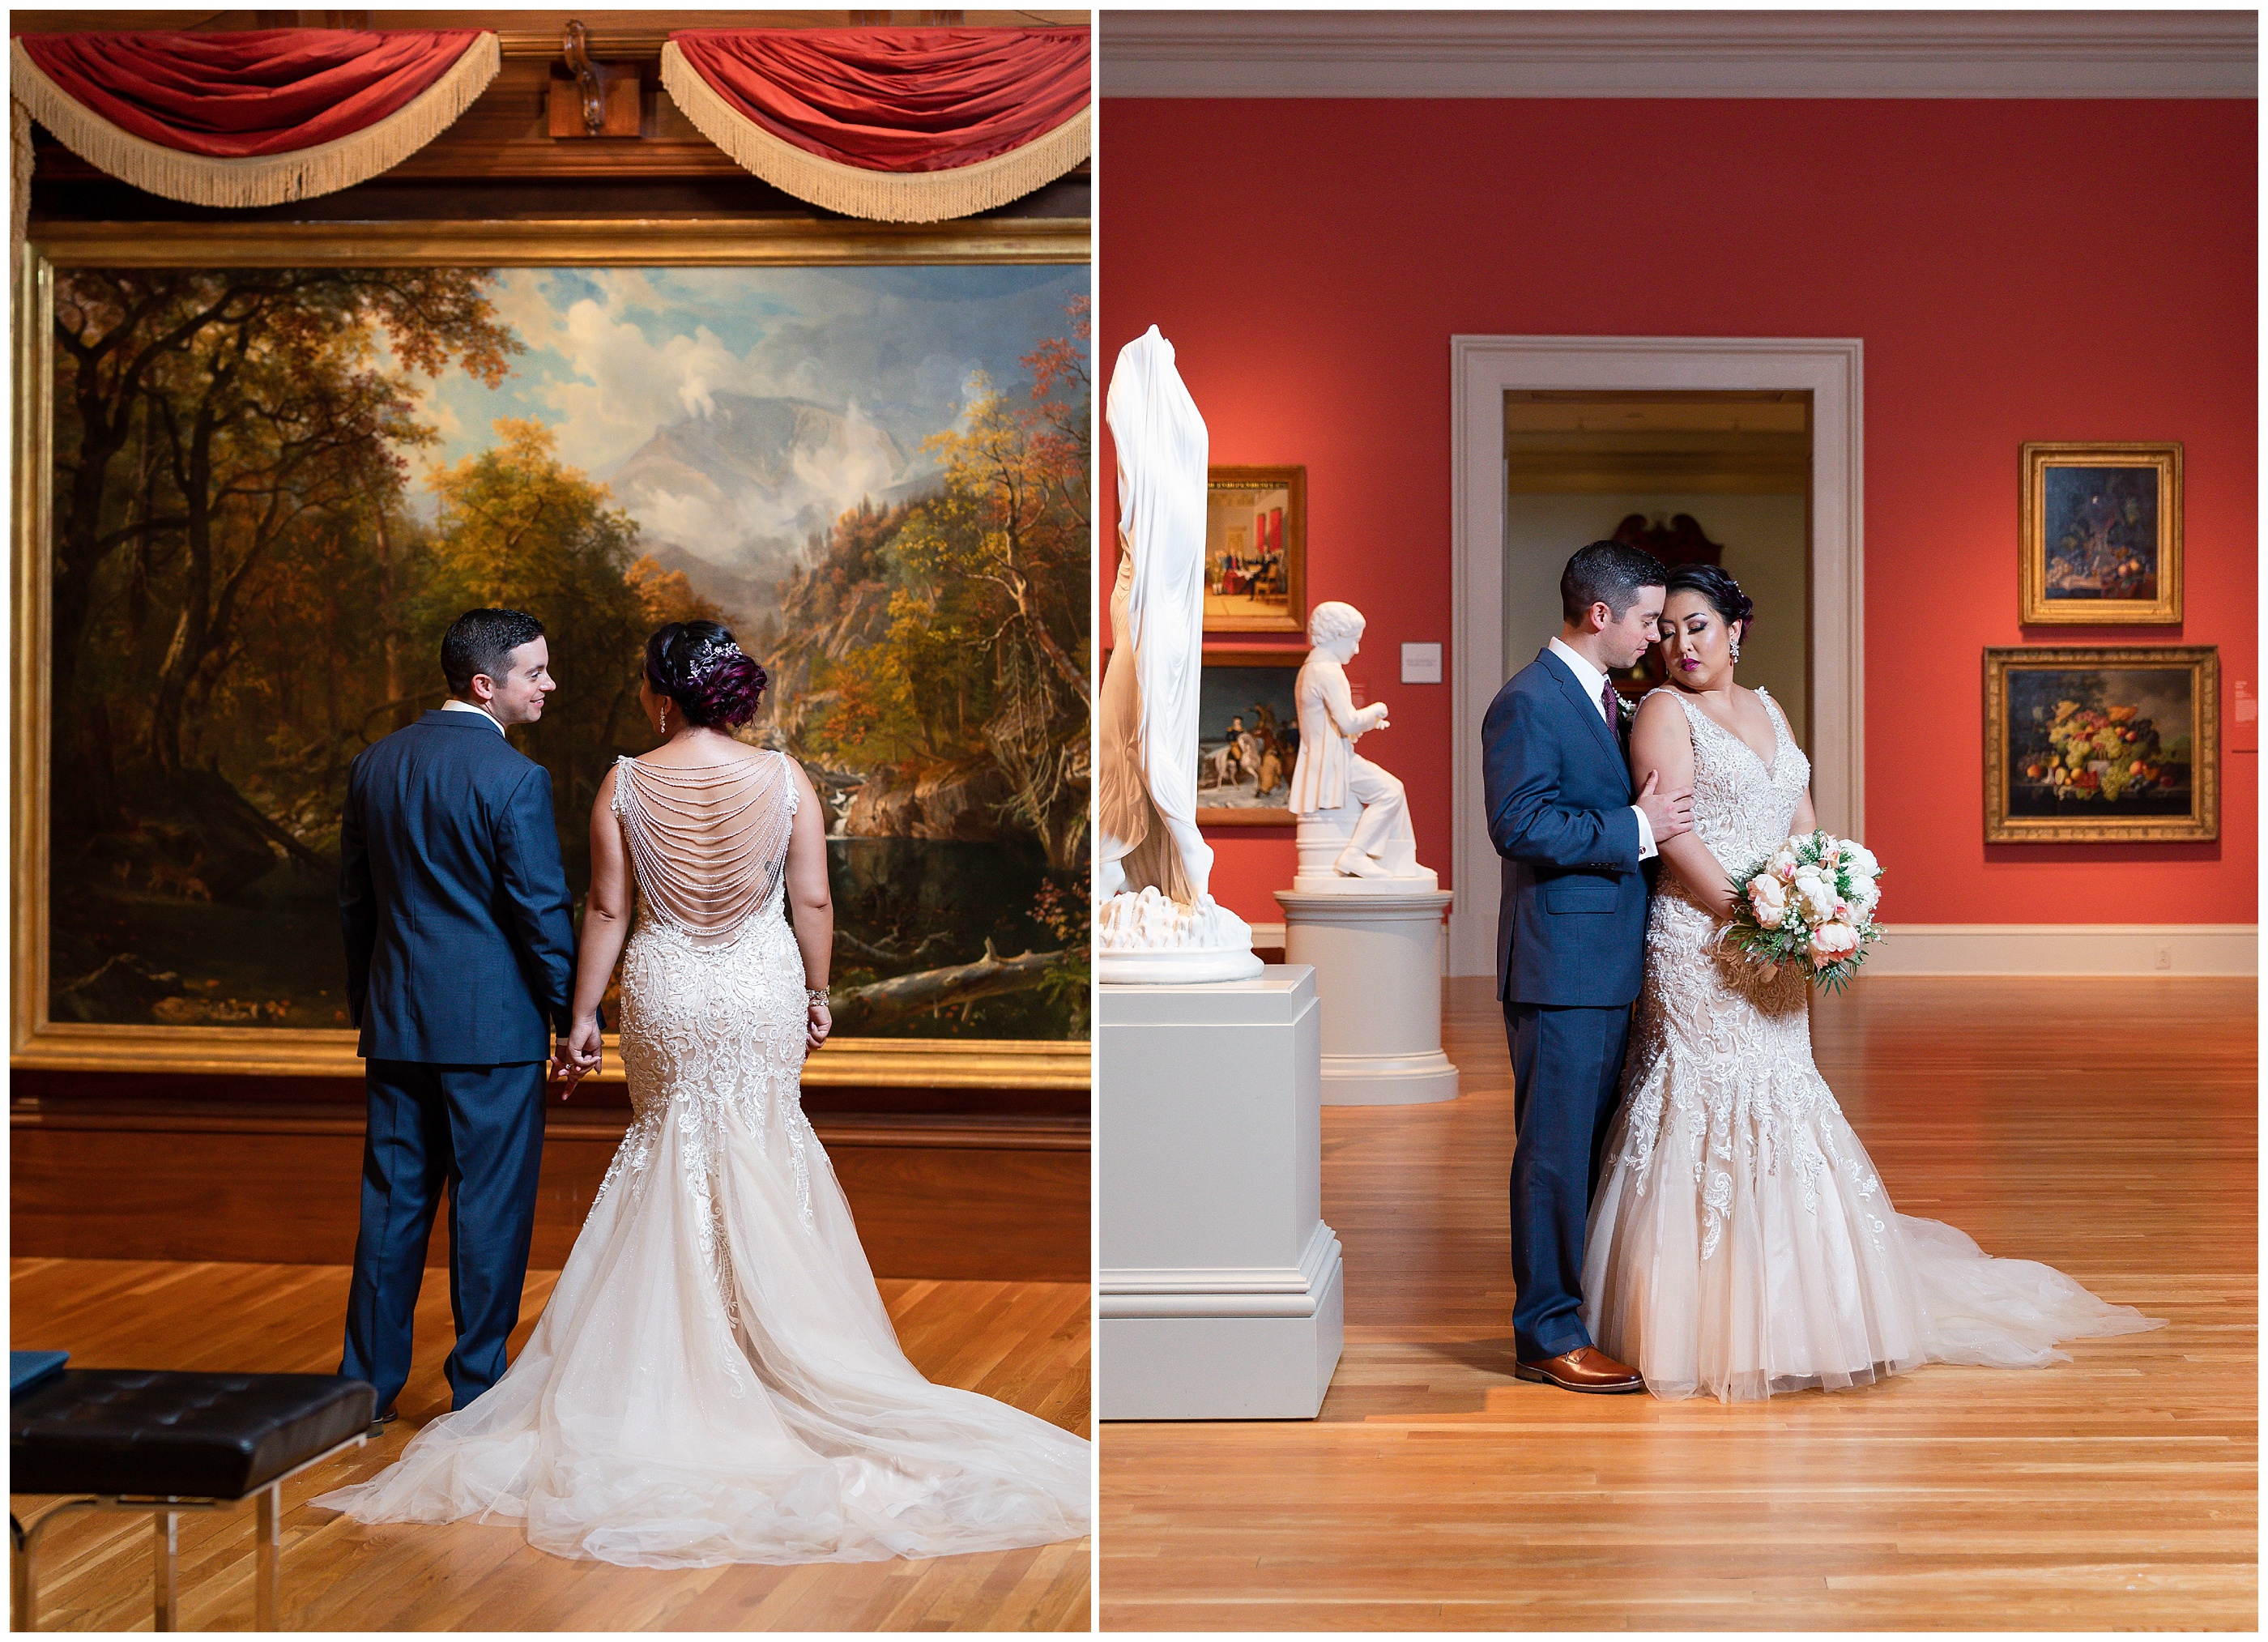 Chrysler Museum of Art Norfolk Va Wedding Virginia wedding photographer Luke and Ashley Photography